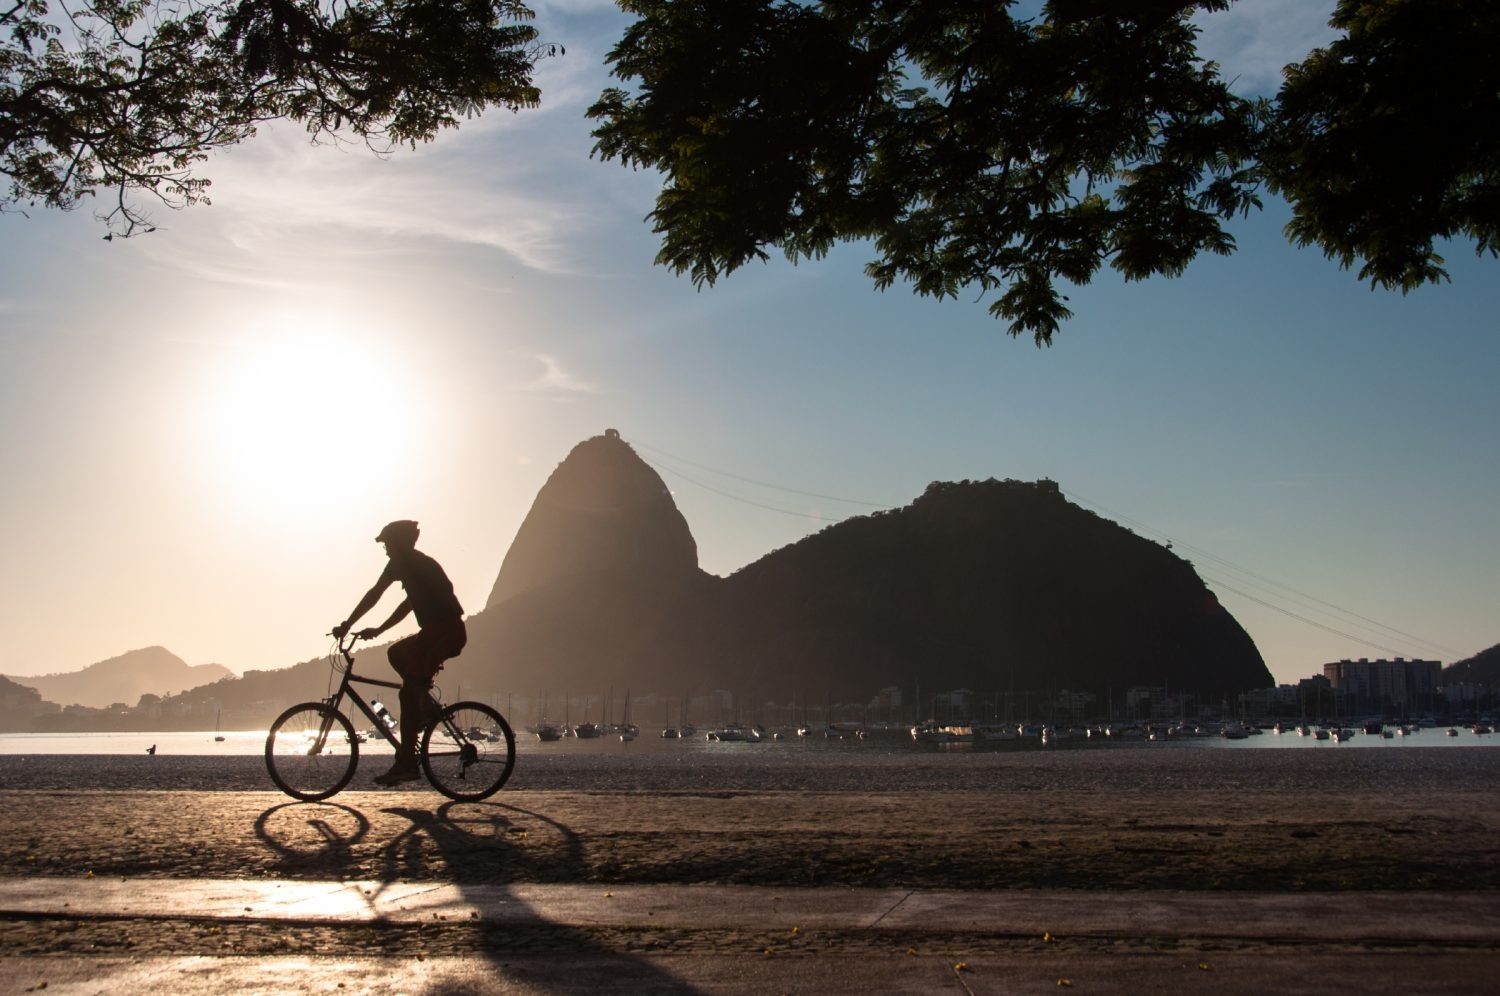 Cycling in Rio de Janeiro with the Sugarloaf Mountain in the horizon. Image: Donatas Dabravolskas/Shutterstock 